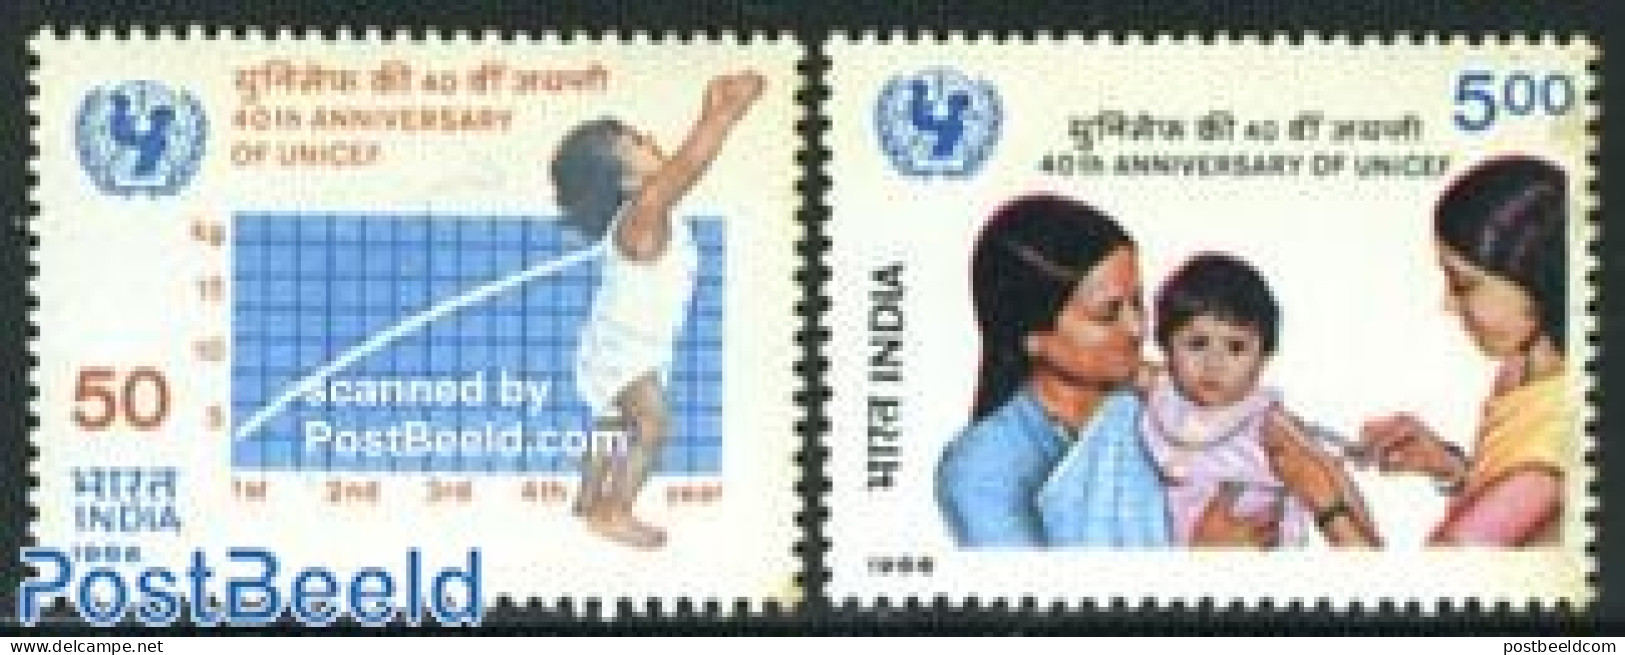 India 1986 UNICEF 2v, Mint NH, History - Unicef - Unused Stamps